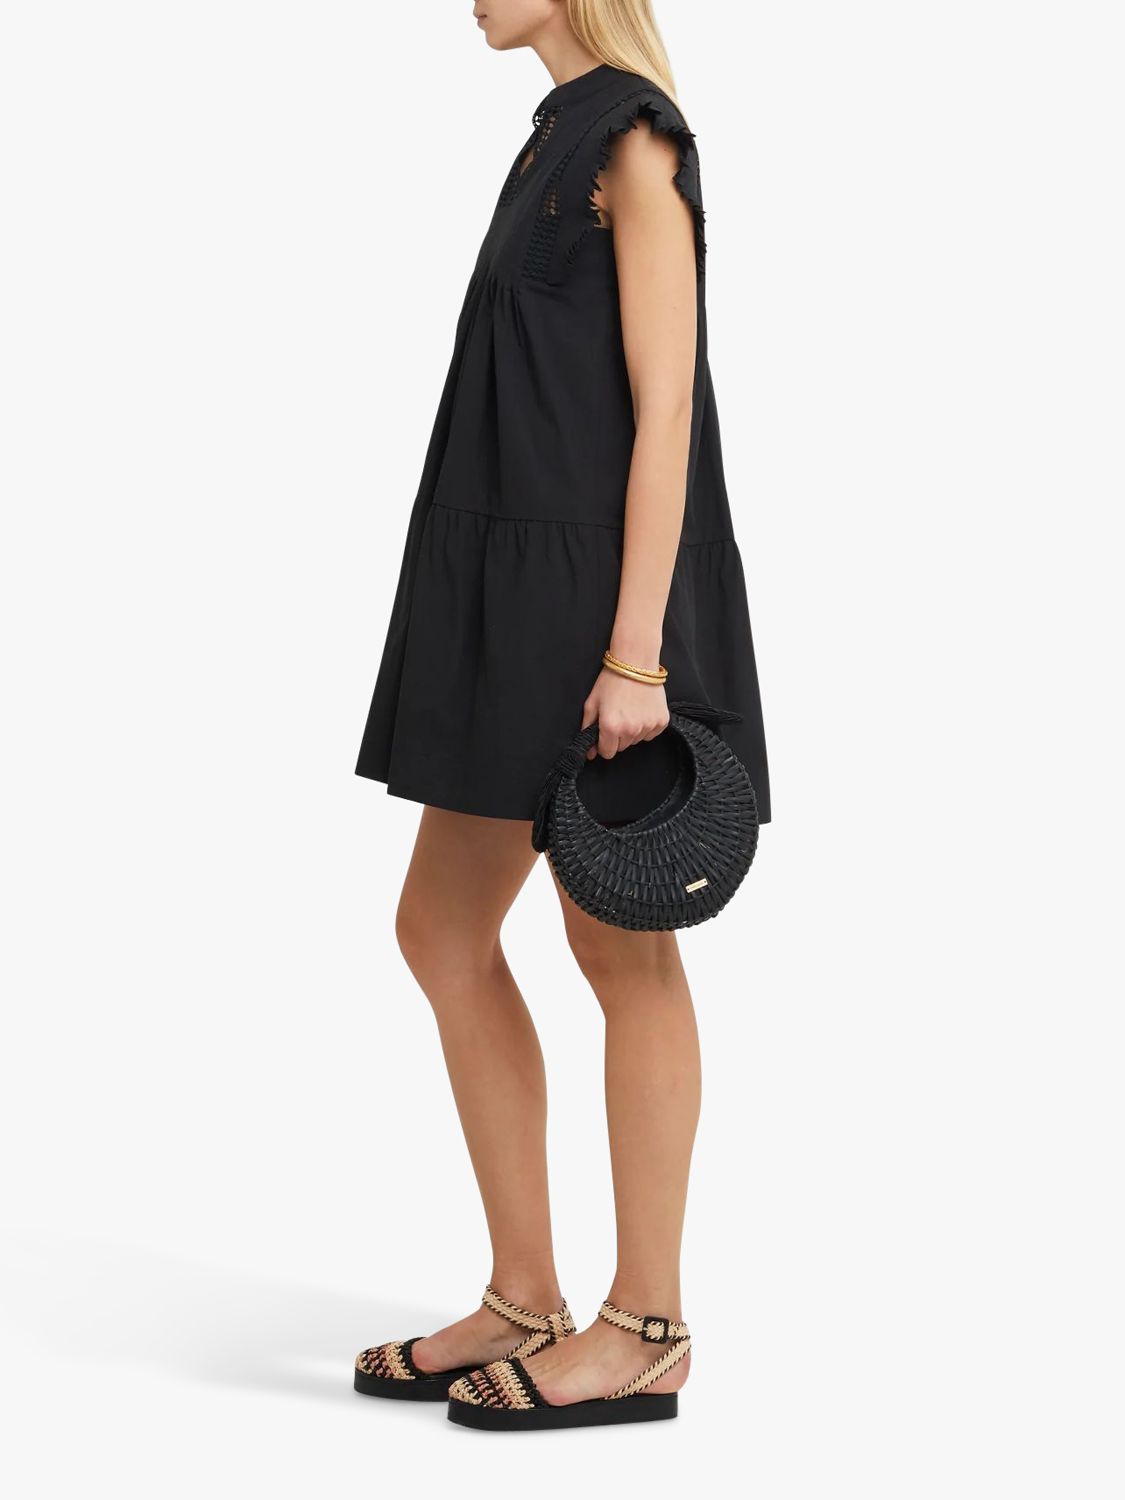 kourt Callan Mini Cotton Midi Dress, Black, S